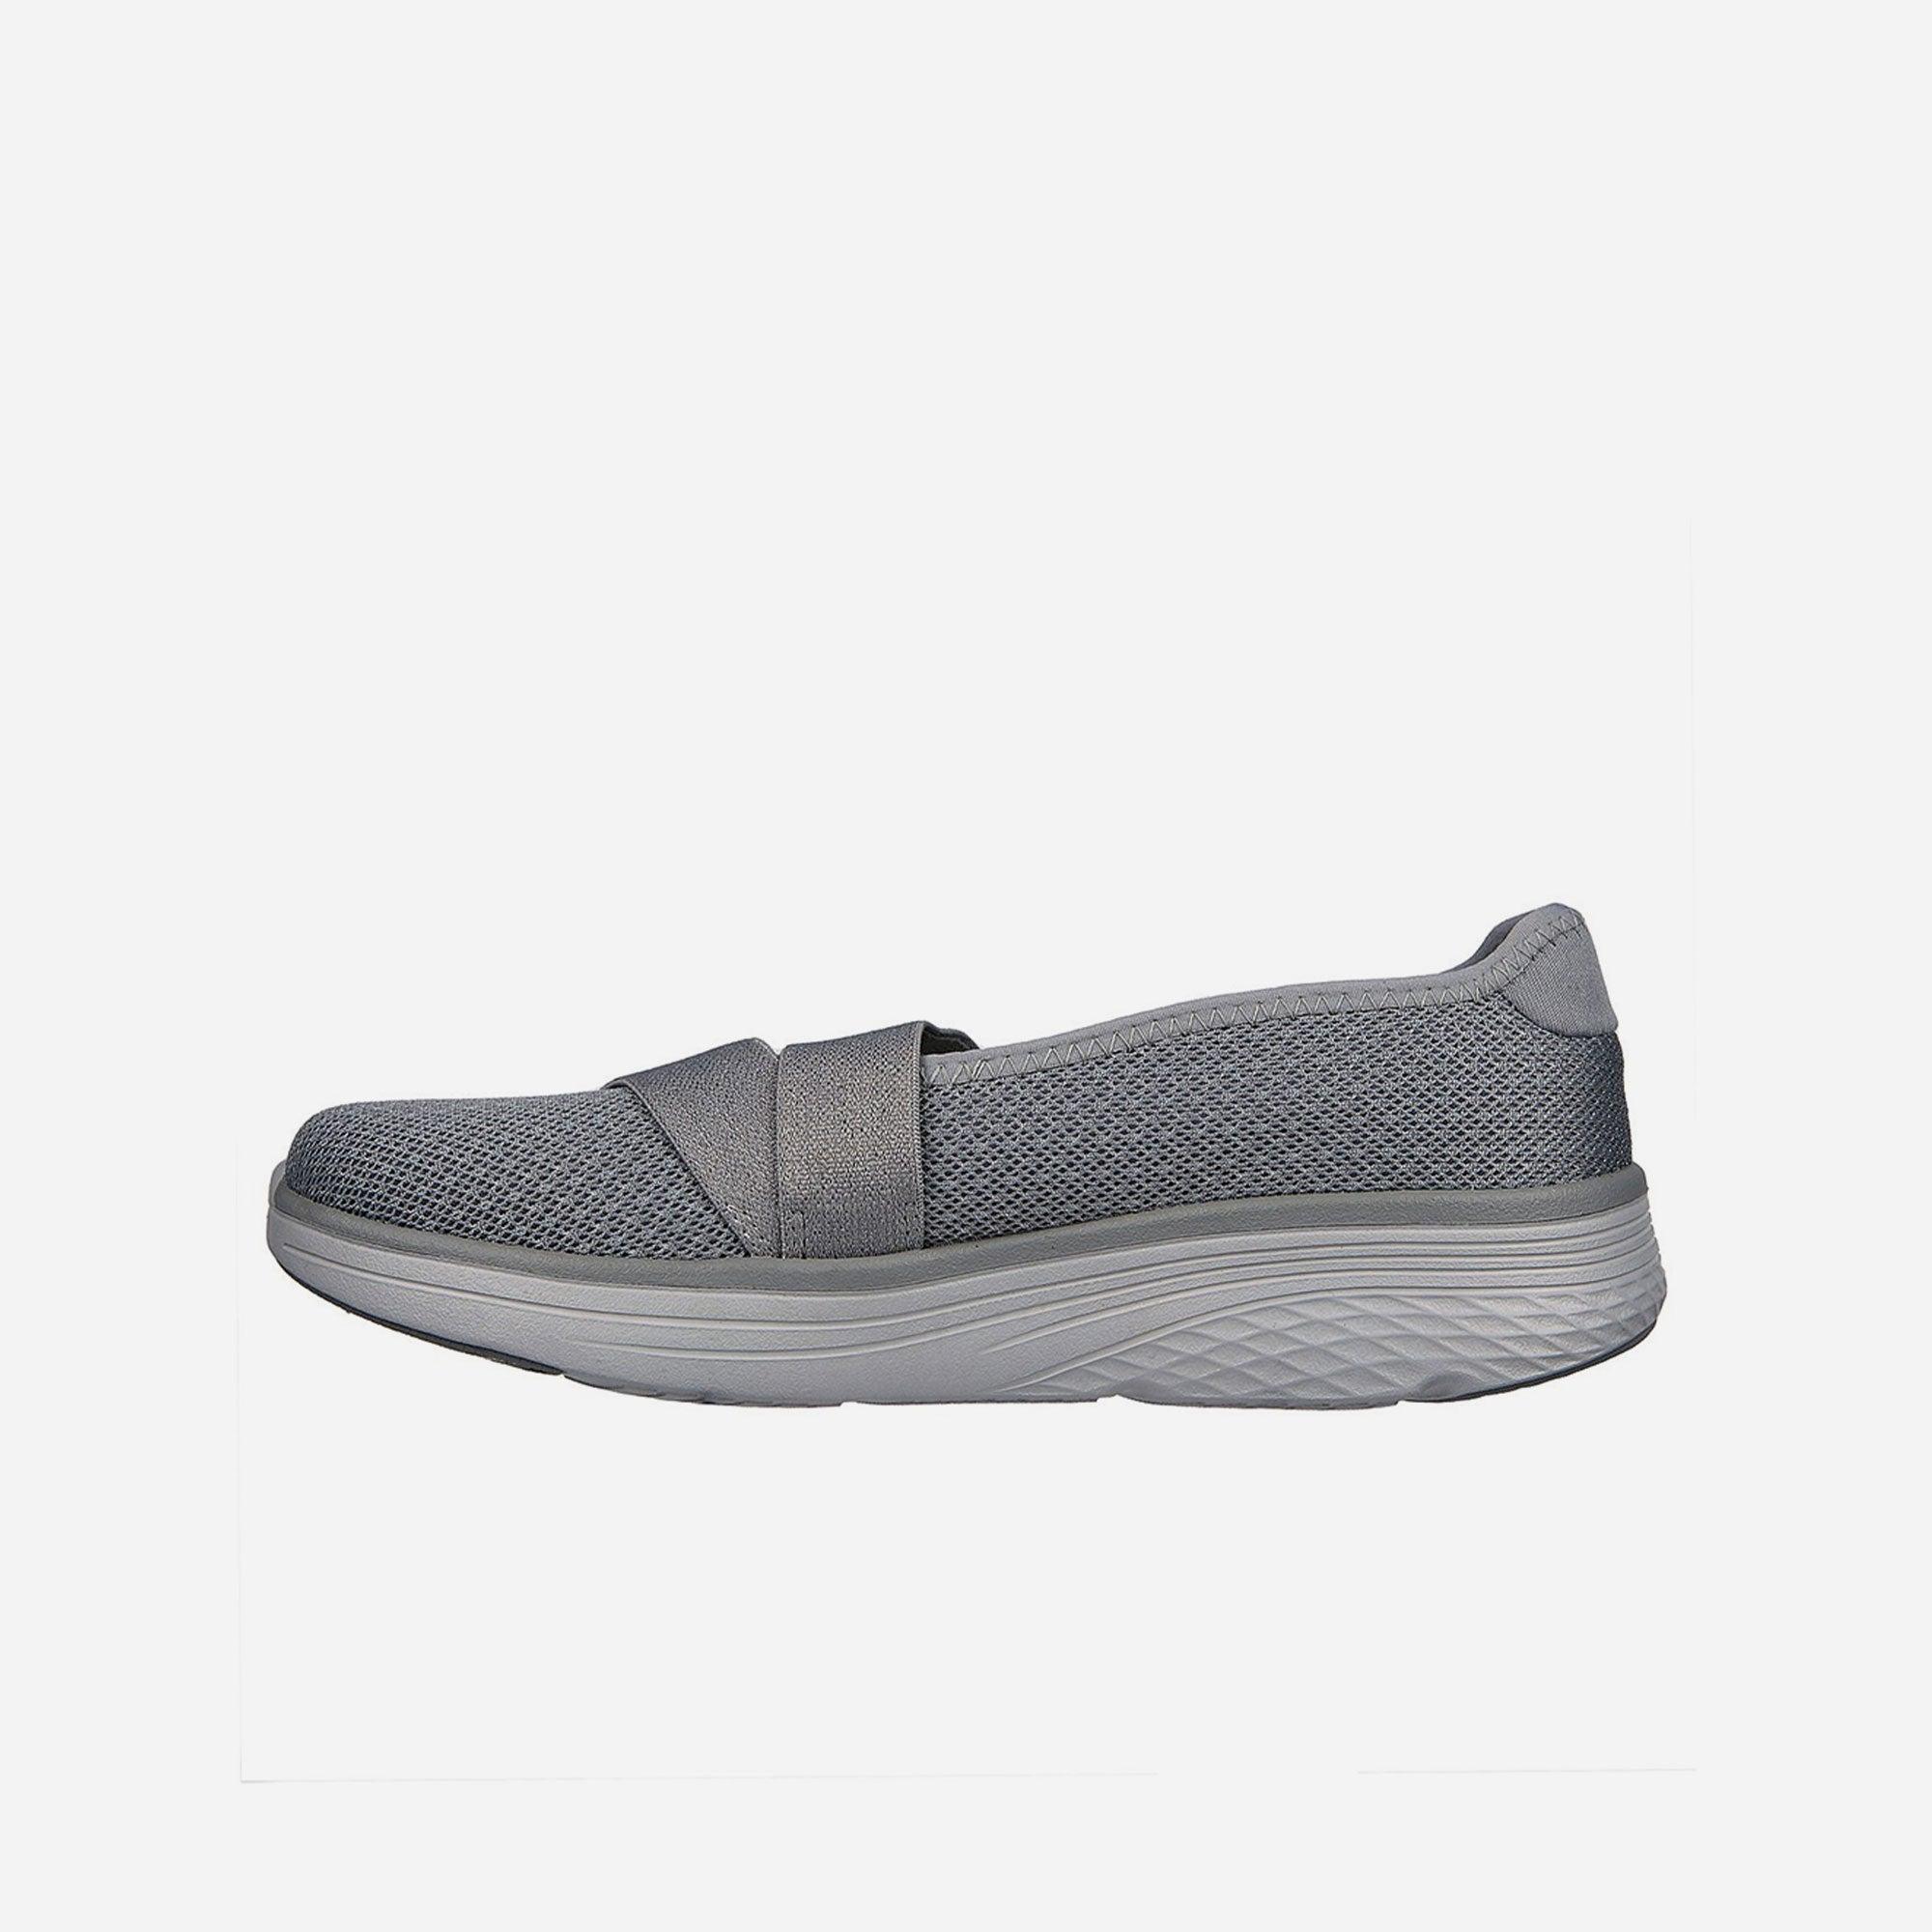 Giày sneaker nữ Skechers Max Cushioning Lite - 136724-GRY